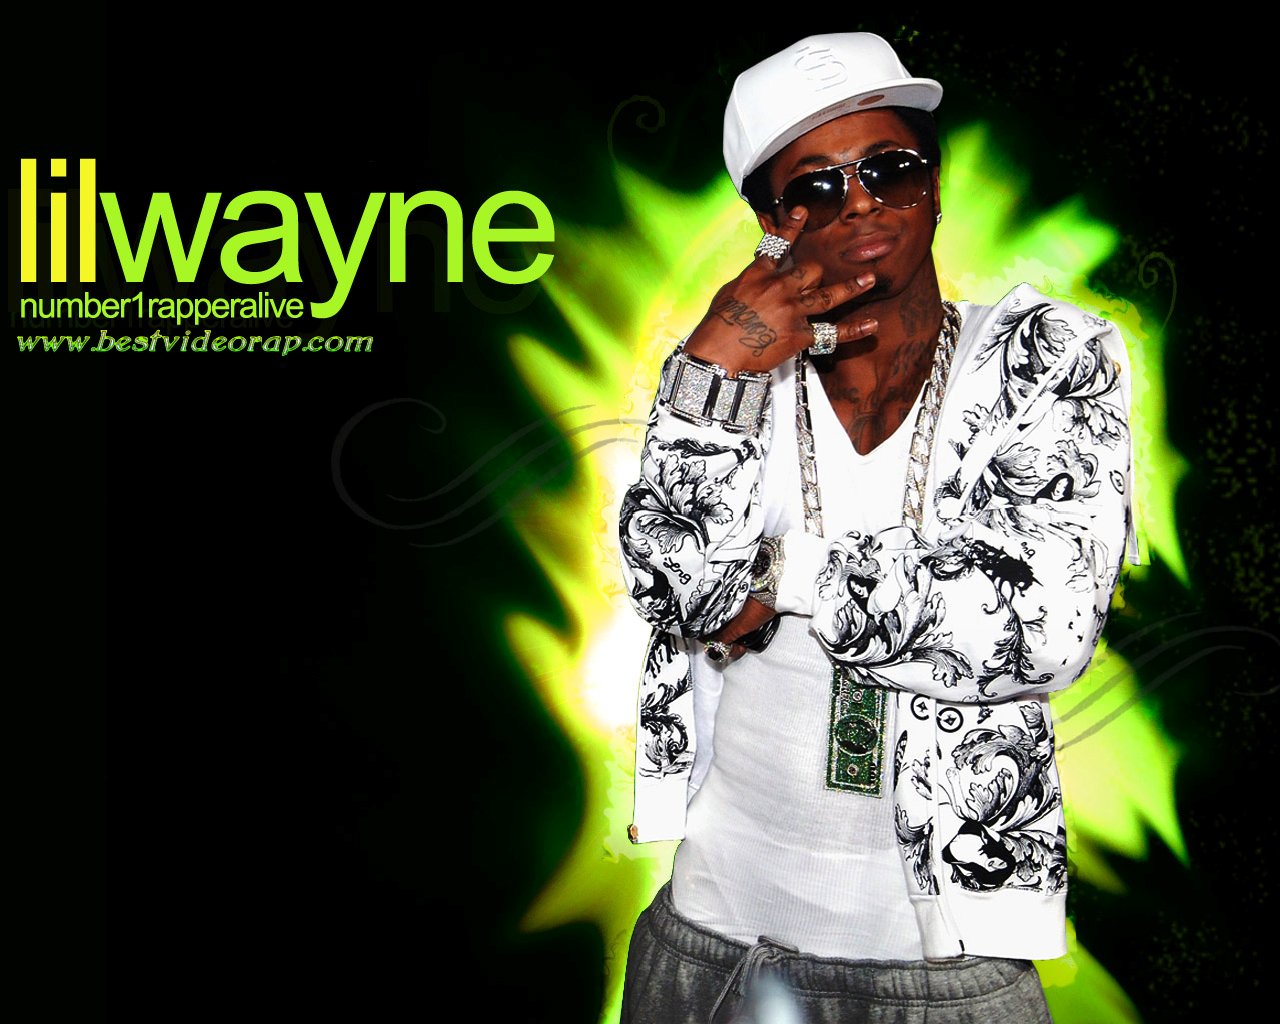 Download all pictures Lil Wayne DepositFiles or RapidShare